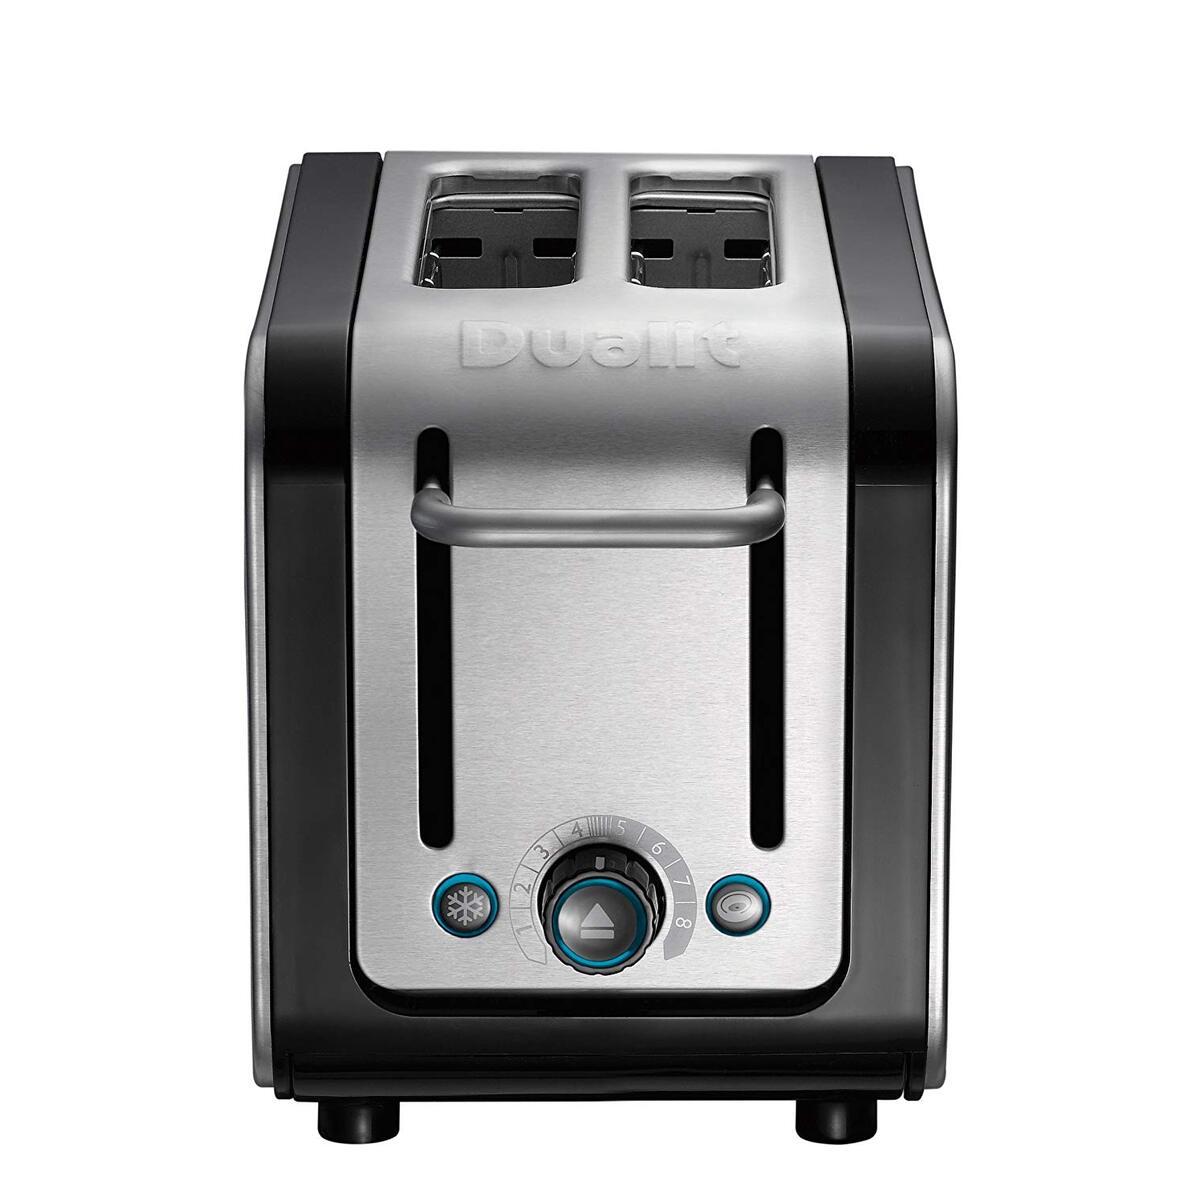 Dualit 26505 ARCHITECT 2 Slot Toaster, Black/Stainless Steel